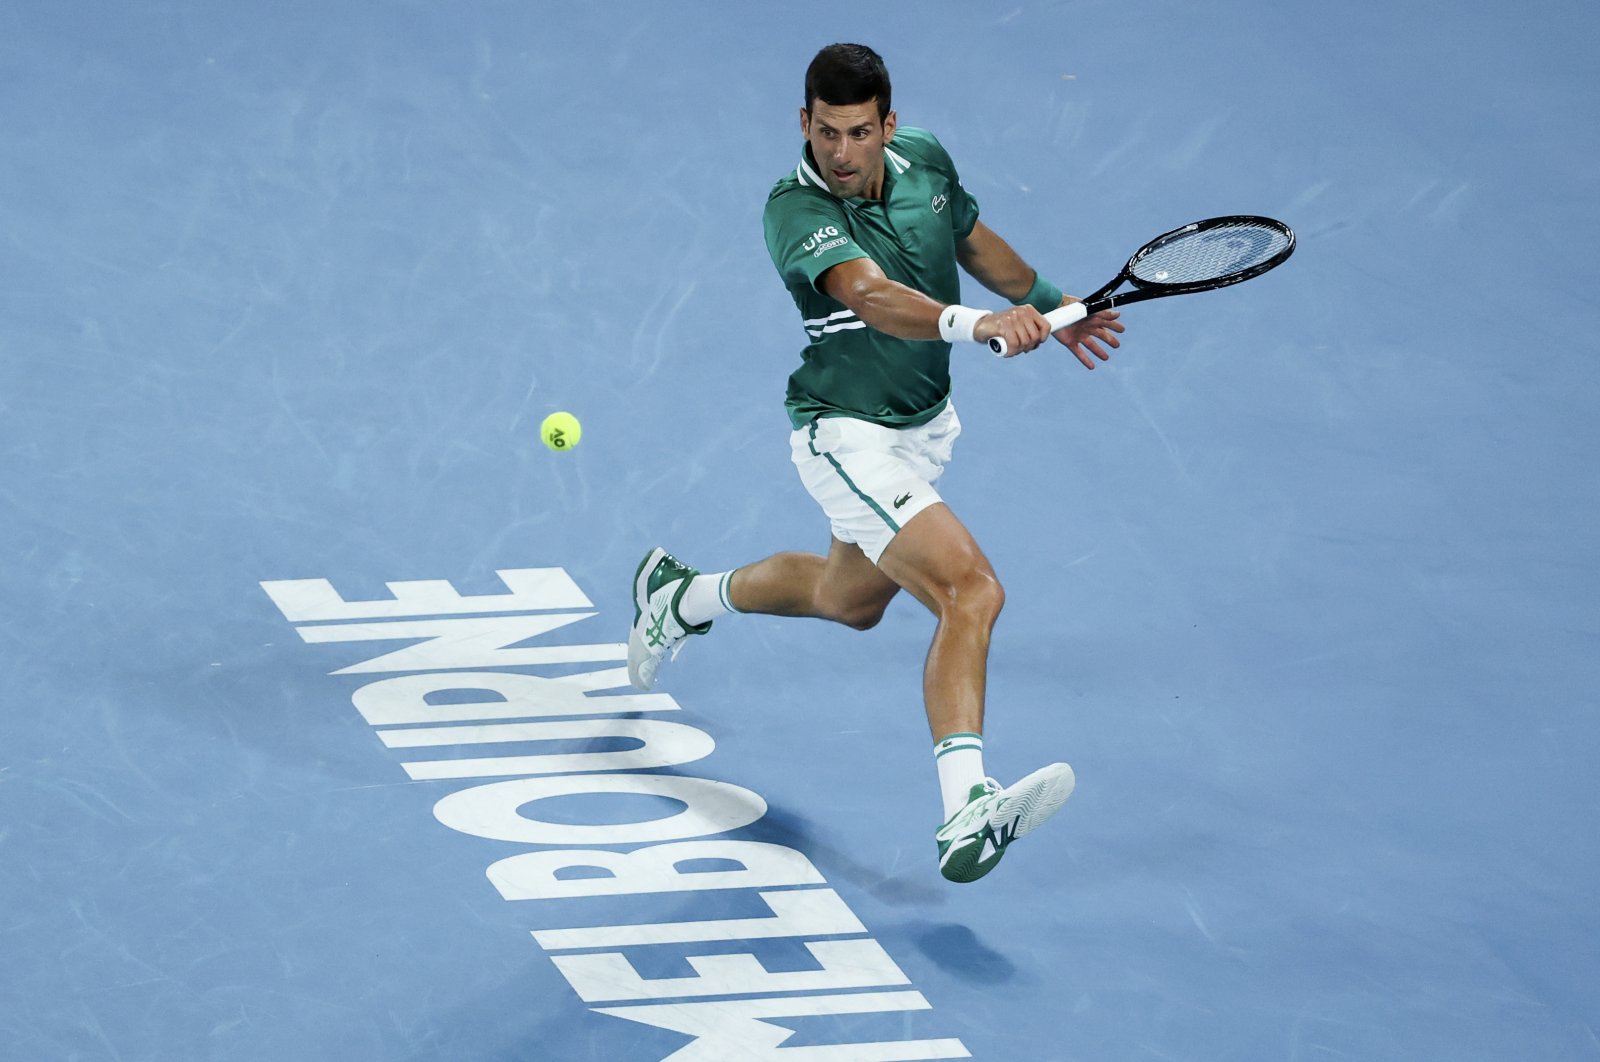 Serbia's Novak Djokovic hits a backhand return to Germany's Alexander Zverev during their quarterfinal match at the Australian Open tennis championship in Melbourne, Australia, Feb. 16, 2021. (AP Photo)